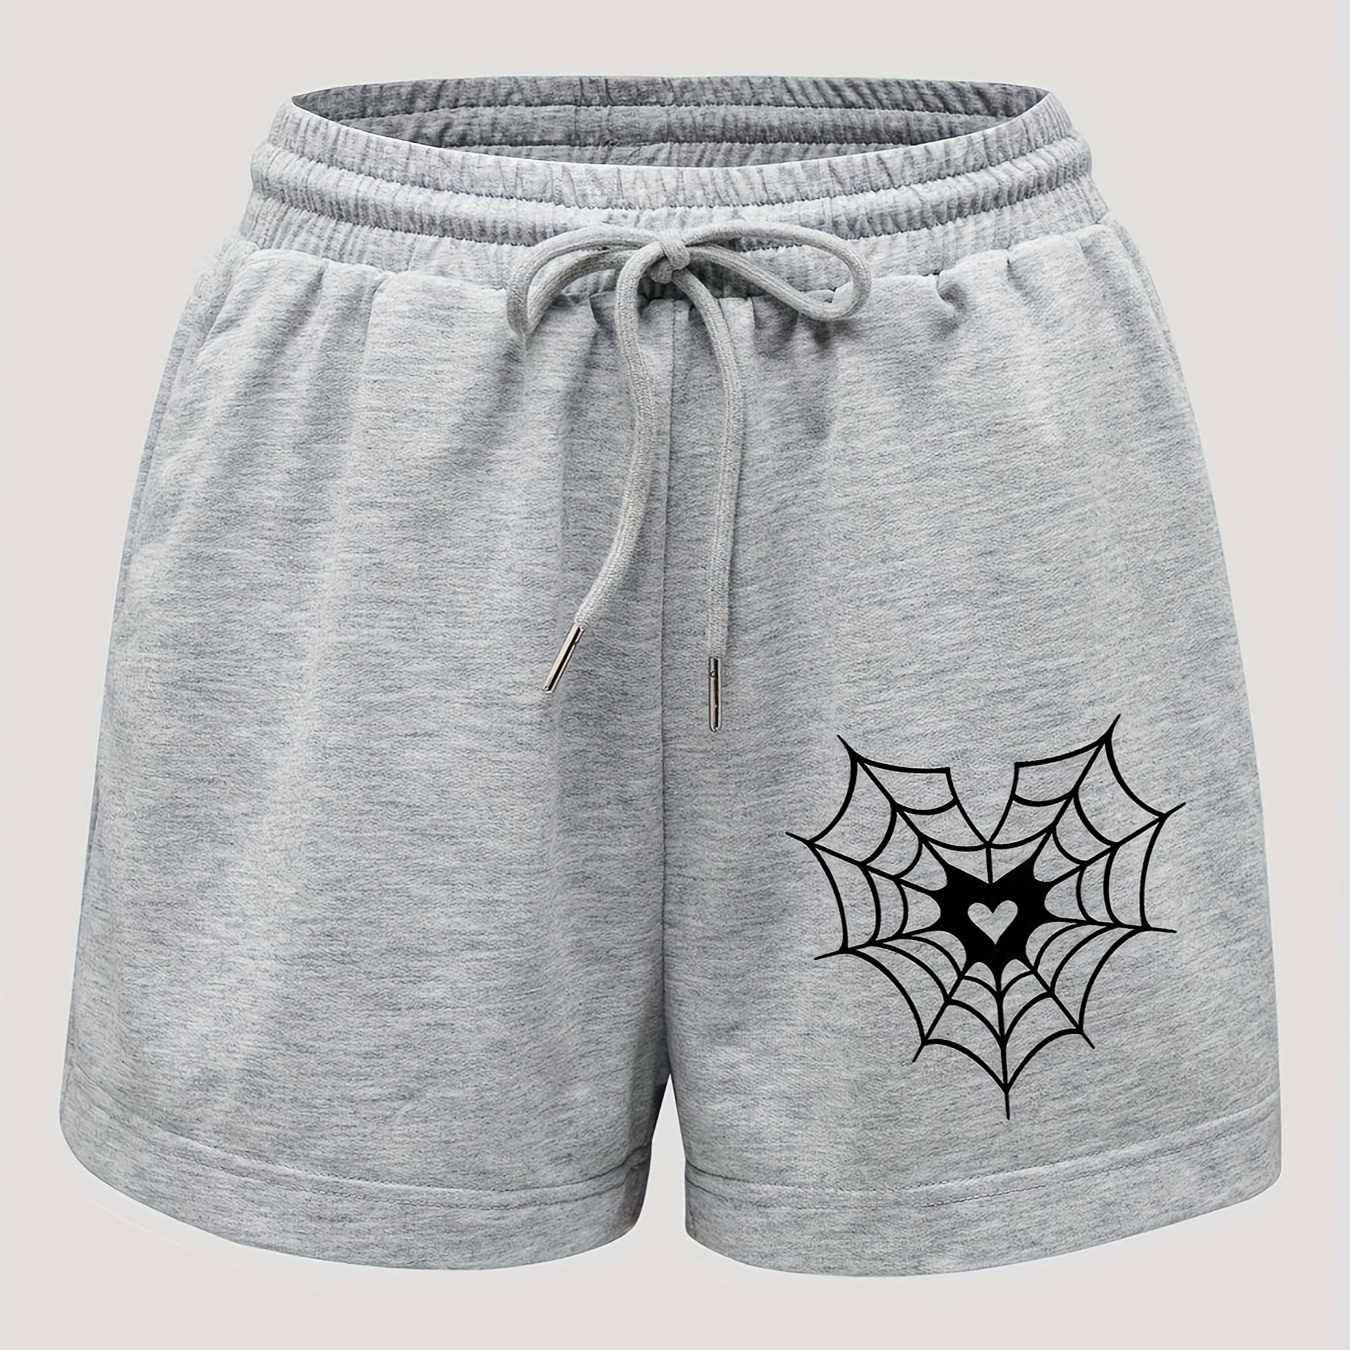 

Spider Web Print Drawstring Shorts, Casual Shorts For Spring & Summer, Women's Clothing